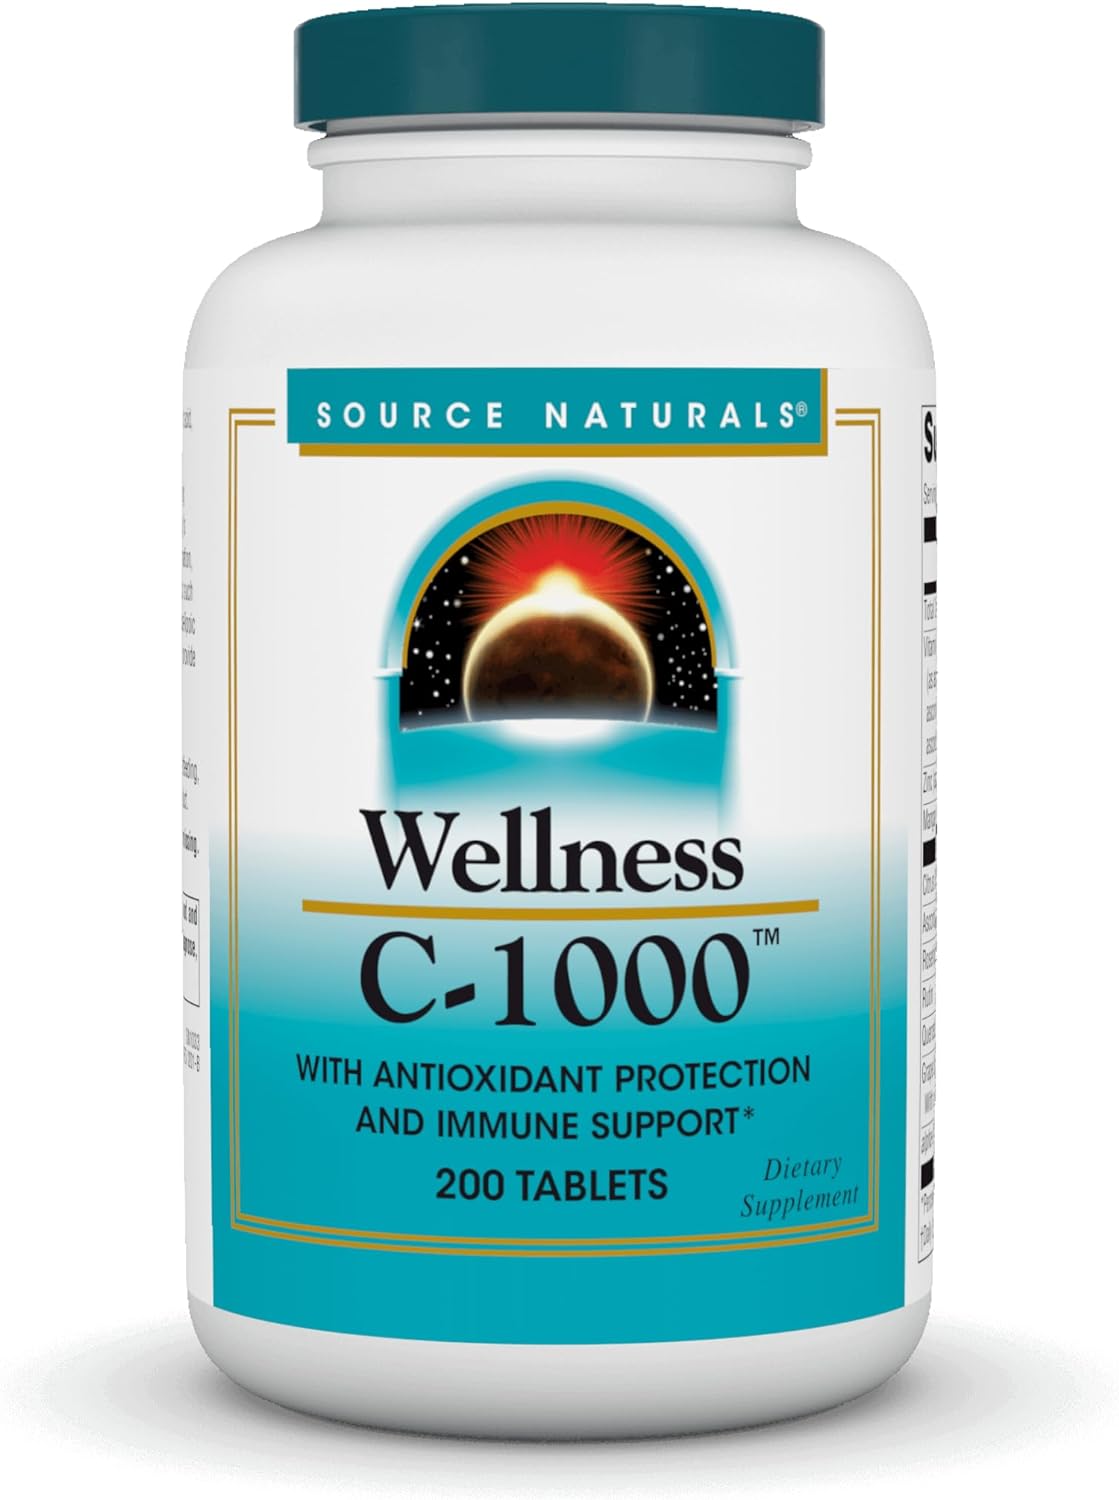 SOURCE NATURALS Wellness C-1000 Tablet, 200 Count